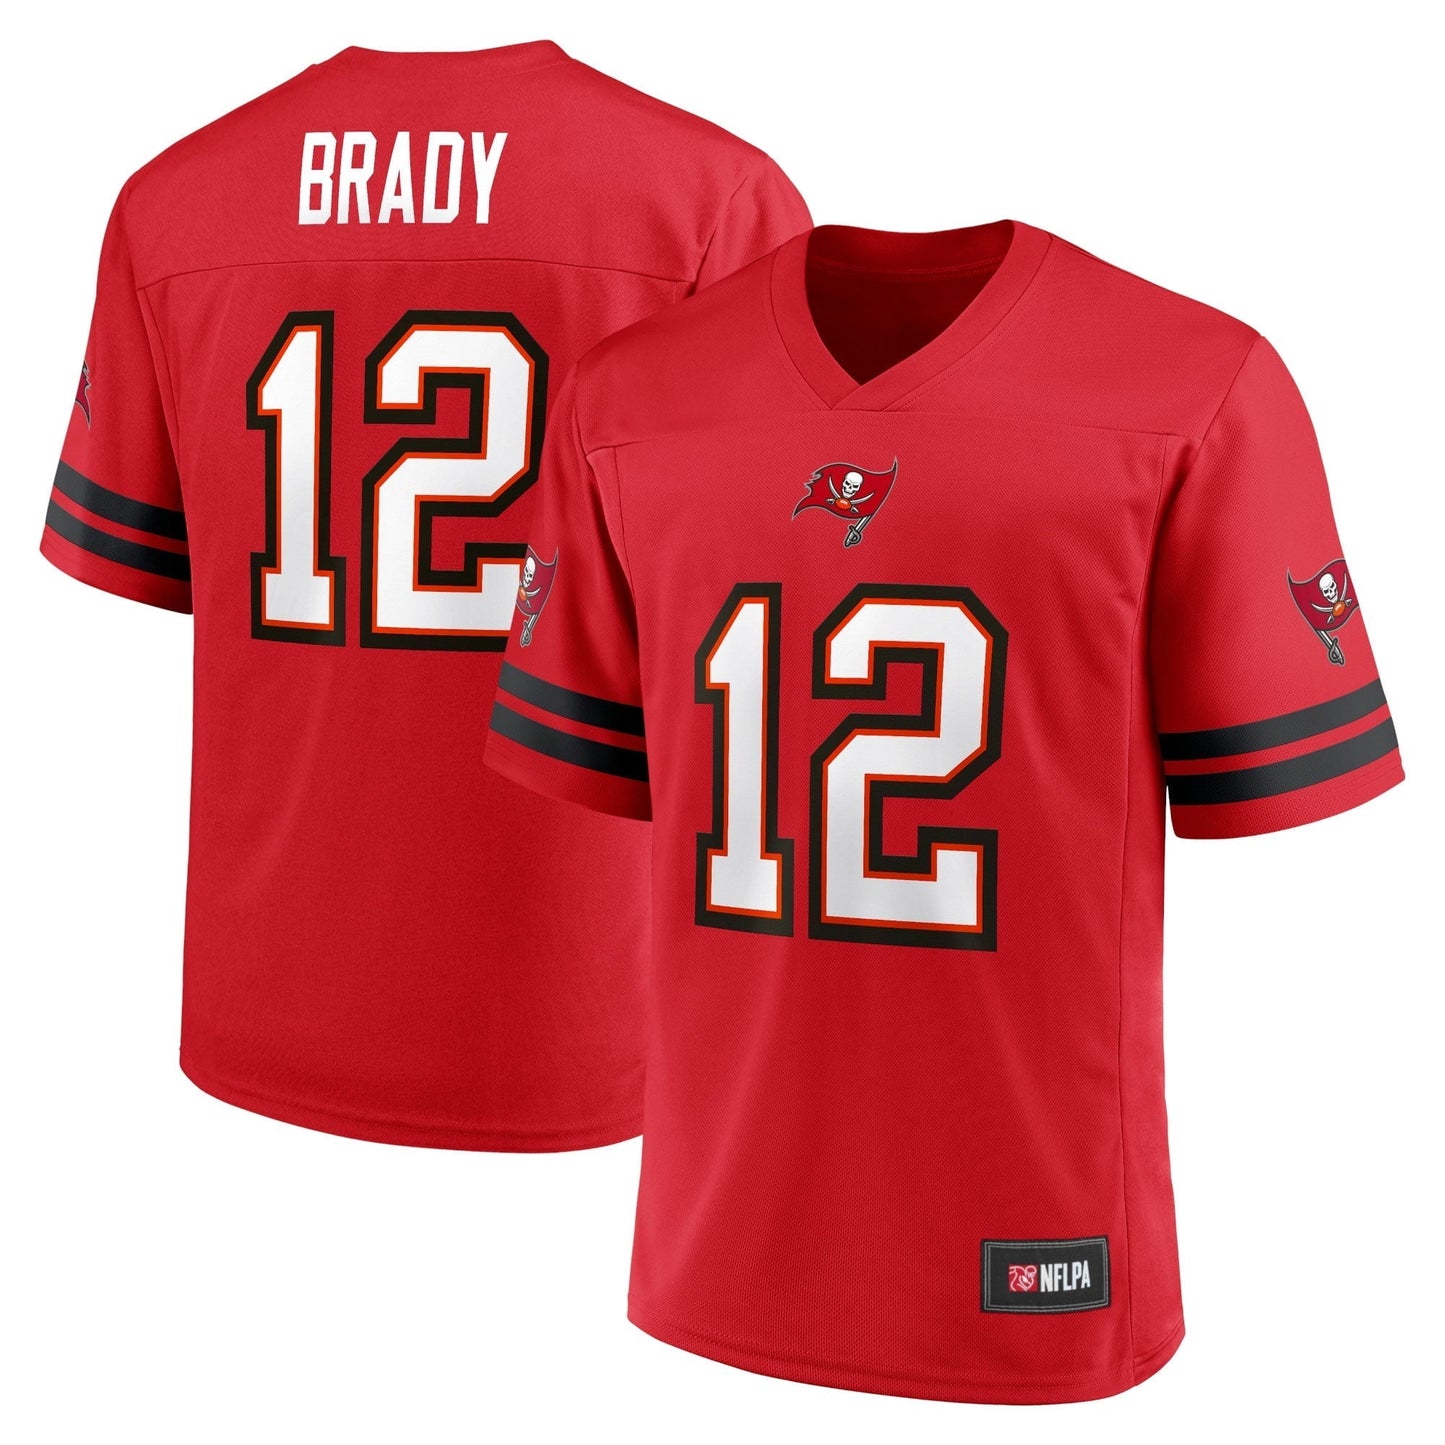 Men's Fanatics Branded Tom Brady Red Tampa Bay Buccaneers Replica Player Jersey